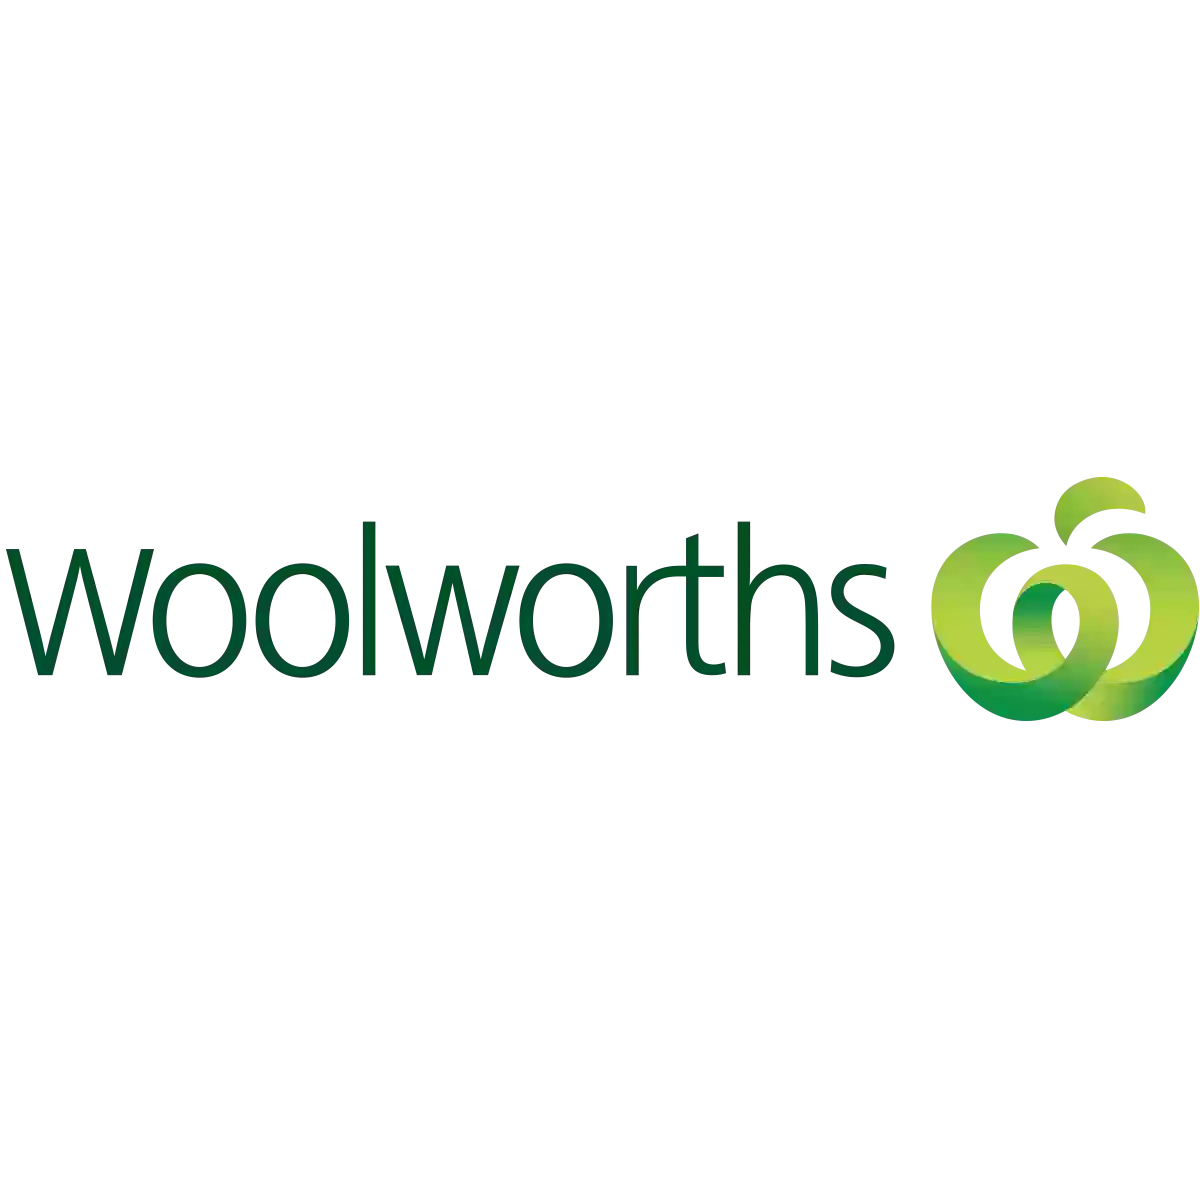 Woolworths Riverton